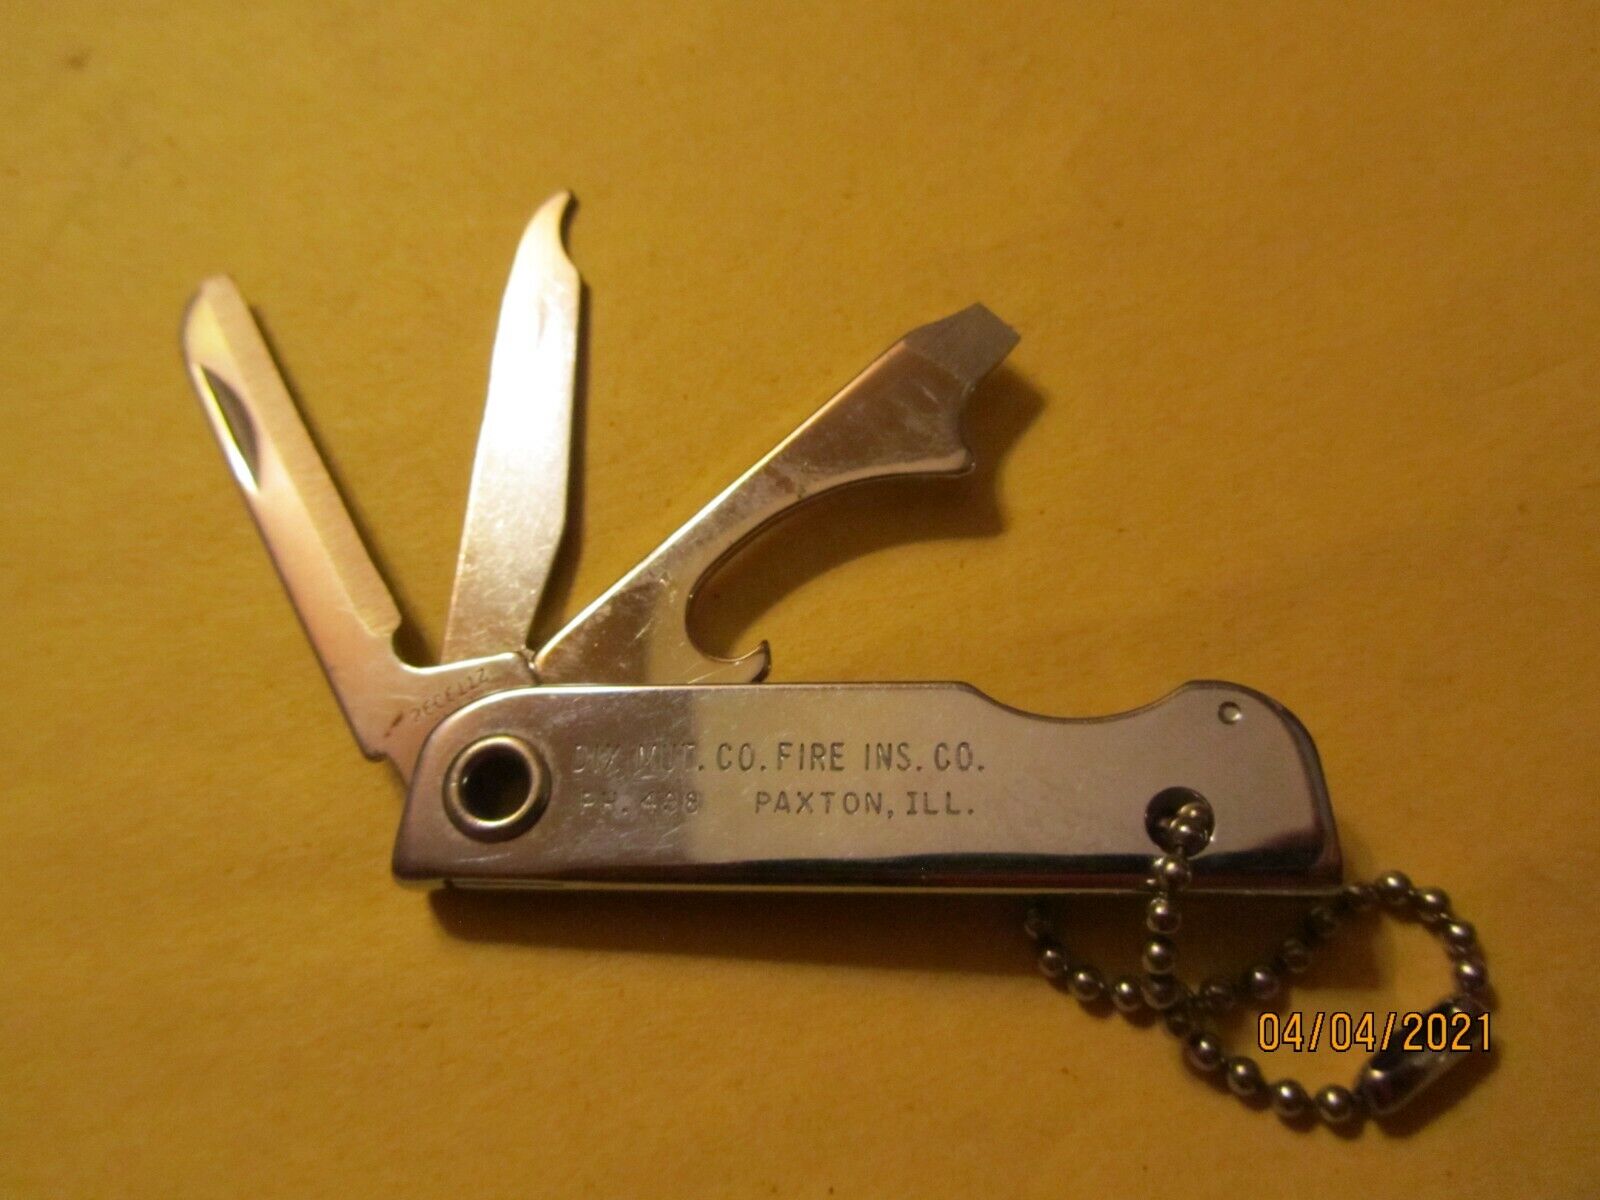 Dix Mut Co Fire Ins Paxton, Ill Pocket Knife Made by Bassett USA 